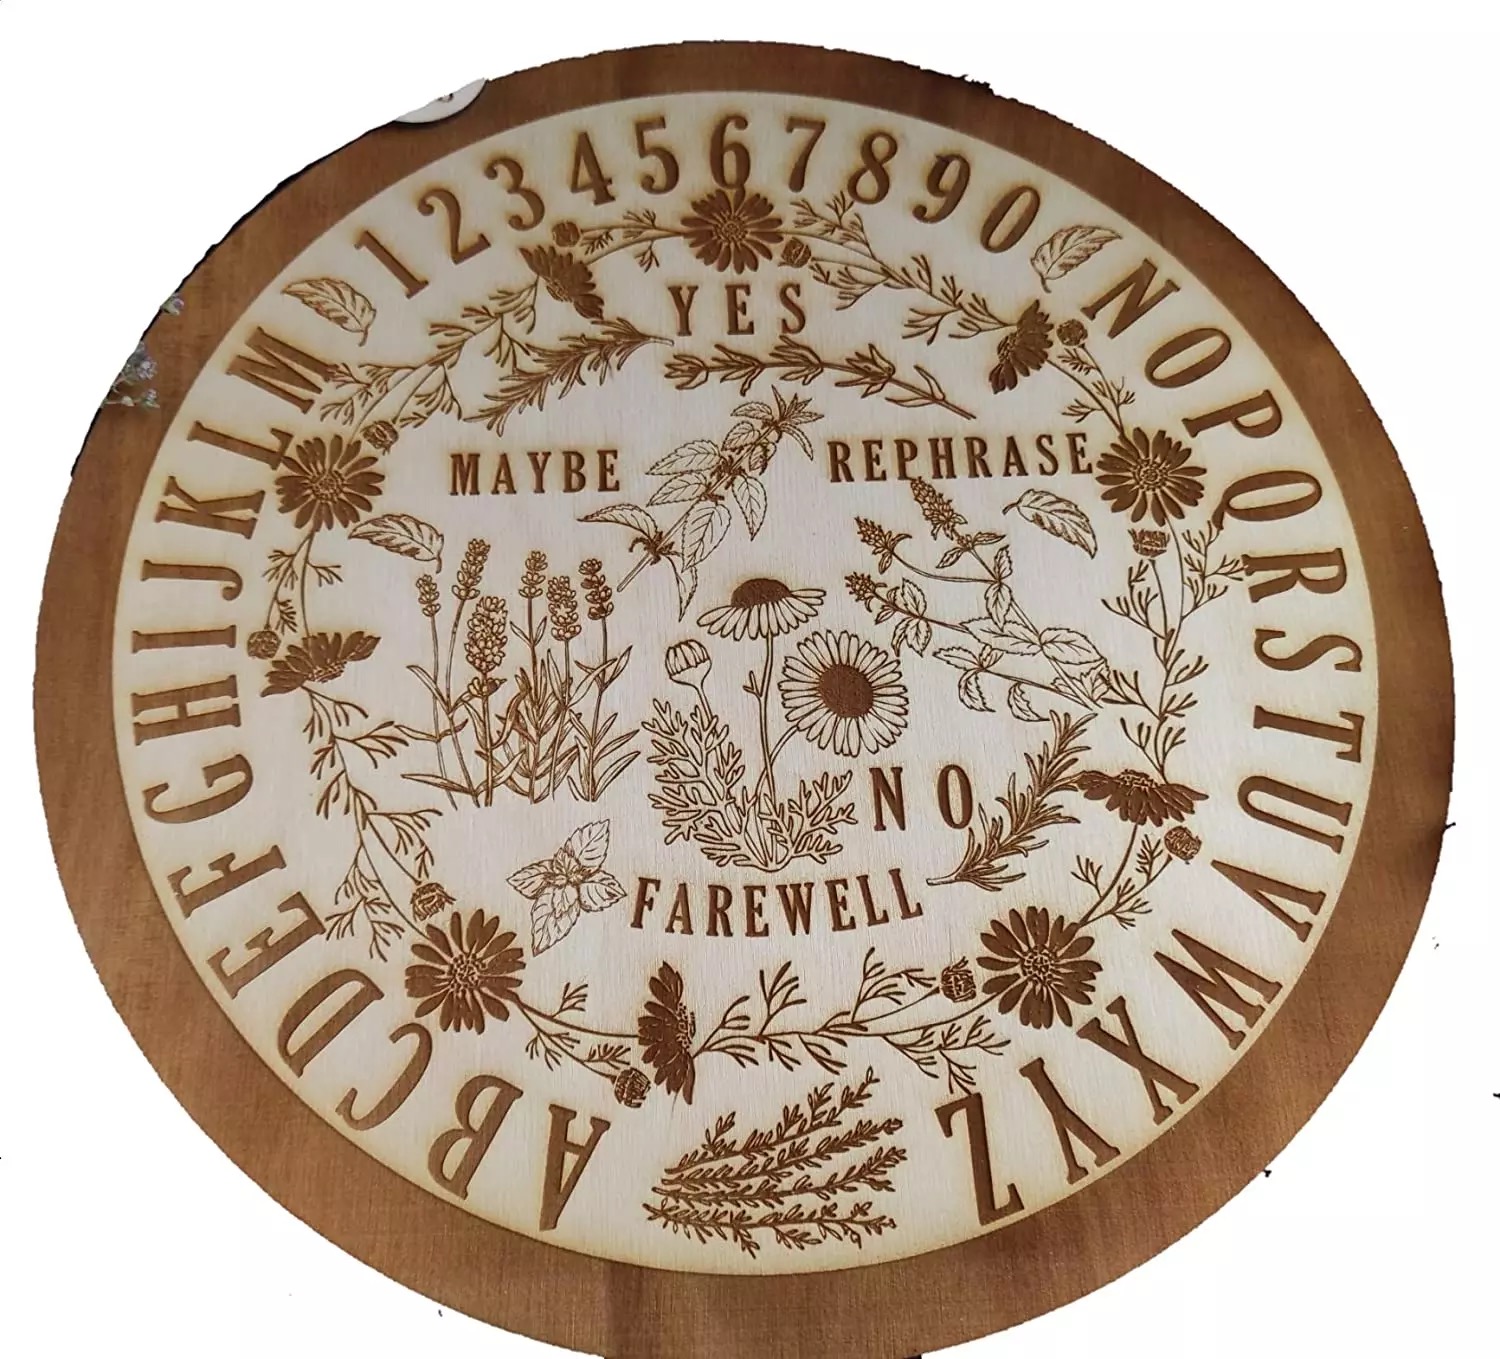 14 inch circular divination board